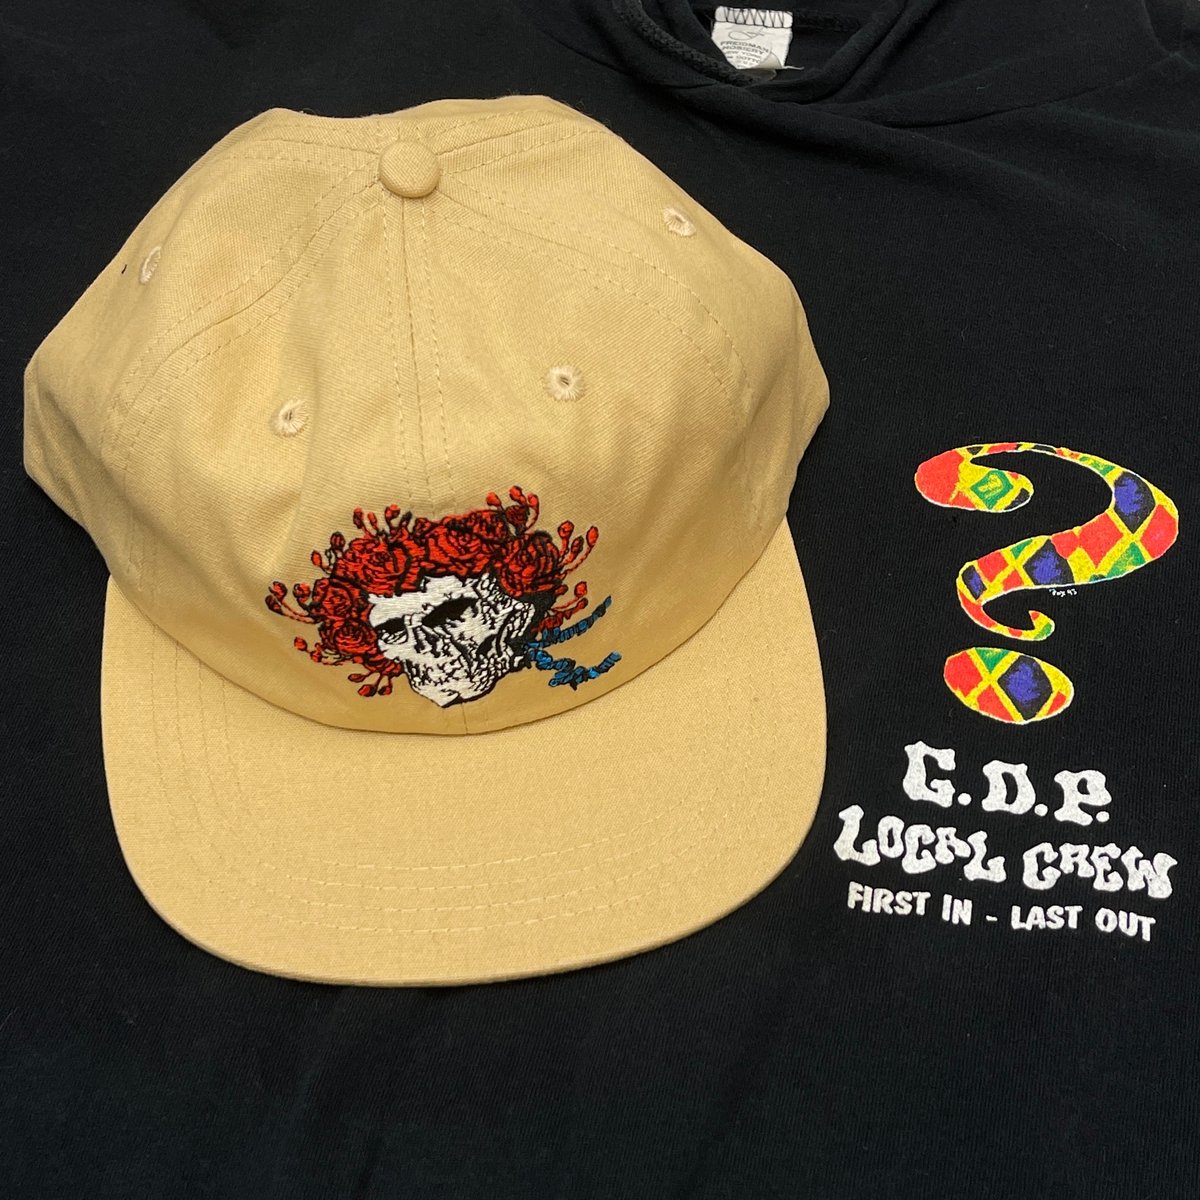 ðŸ”¥FOR SALE!!ðŸ”¥Original Vintage 90's Grateful Dead Road Crew Hoodie! - Ram Rod Collection!! - XL